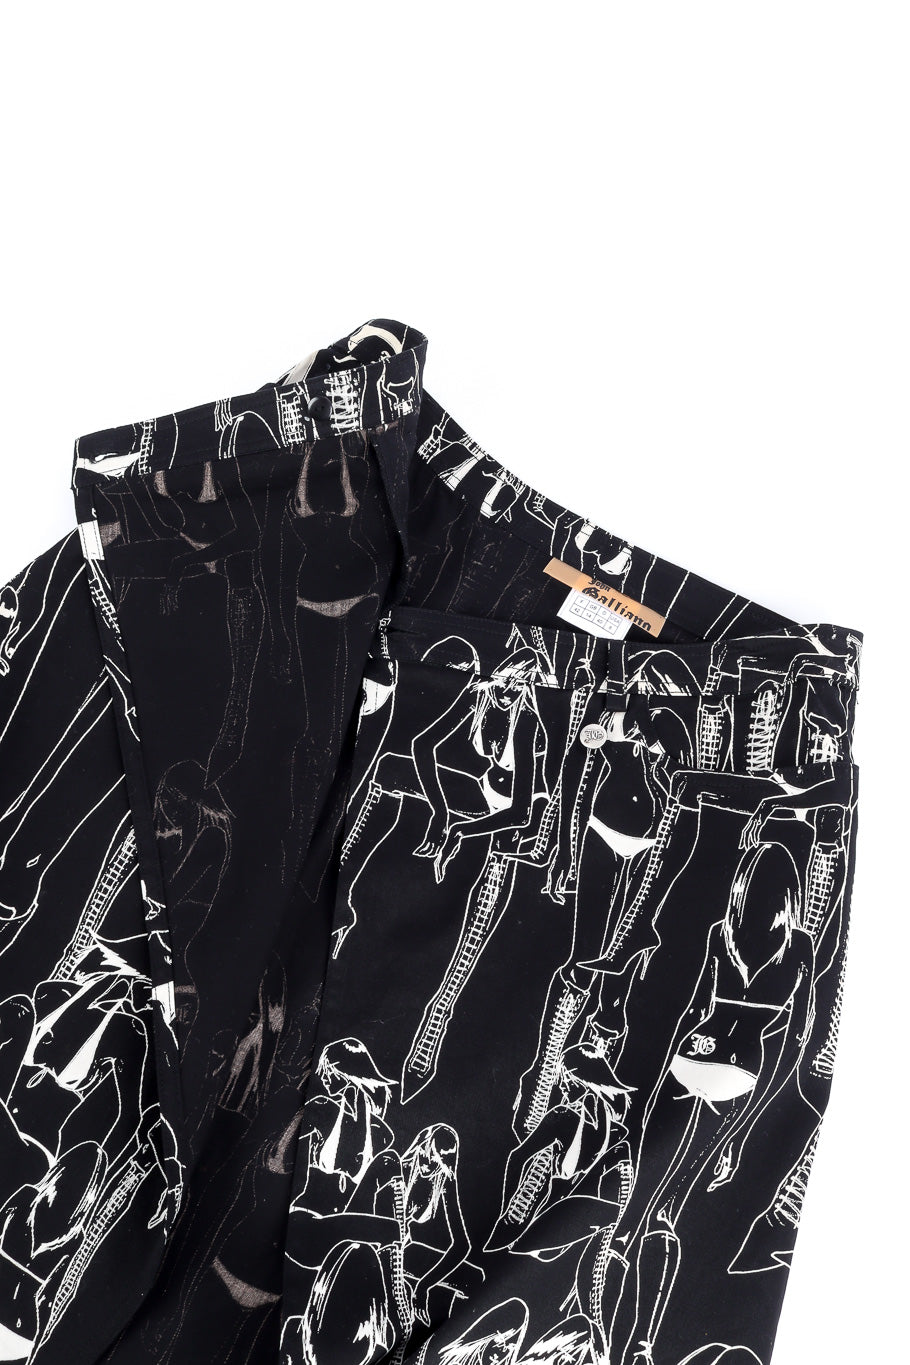 Wrap skirt by John Galliano flat lay @recessla